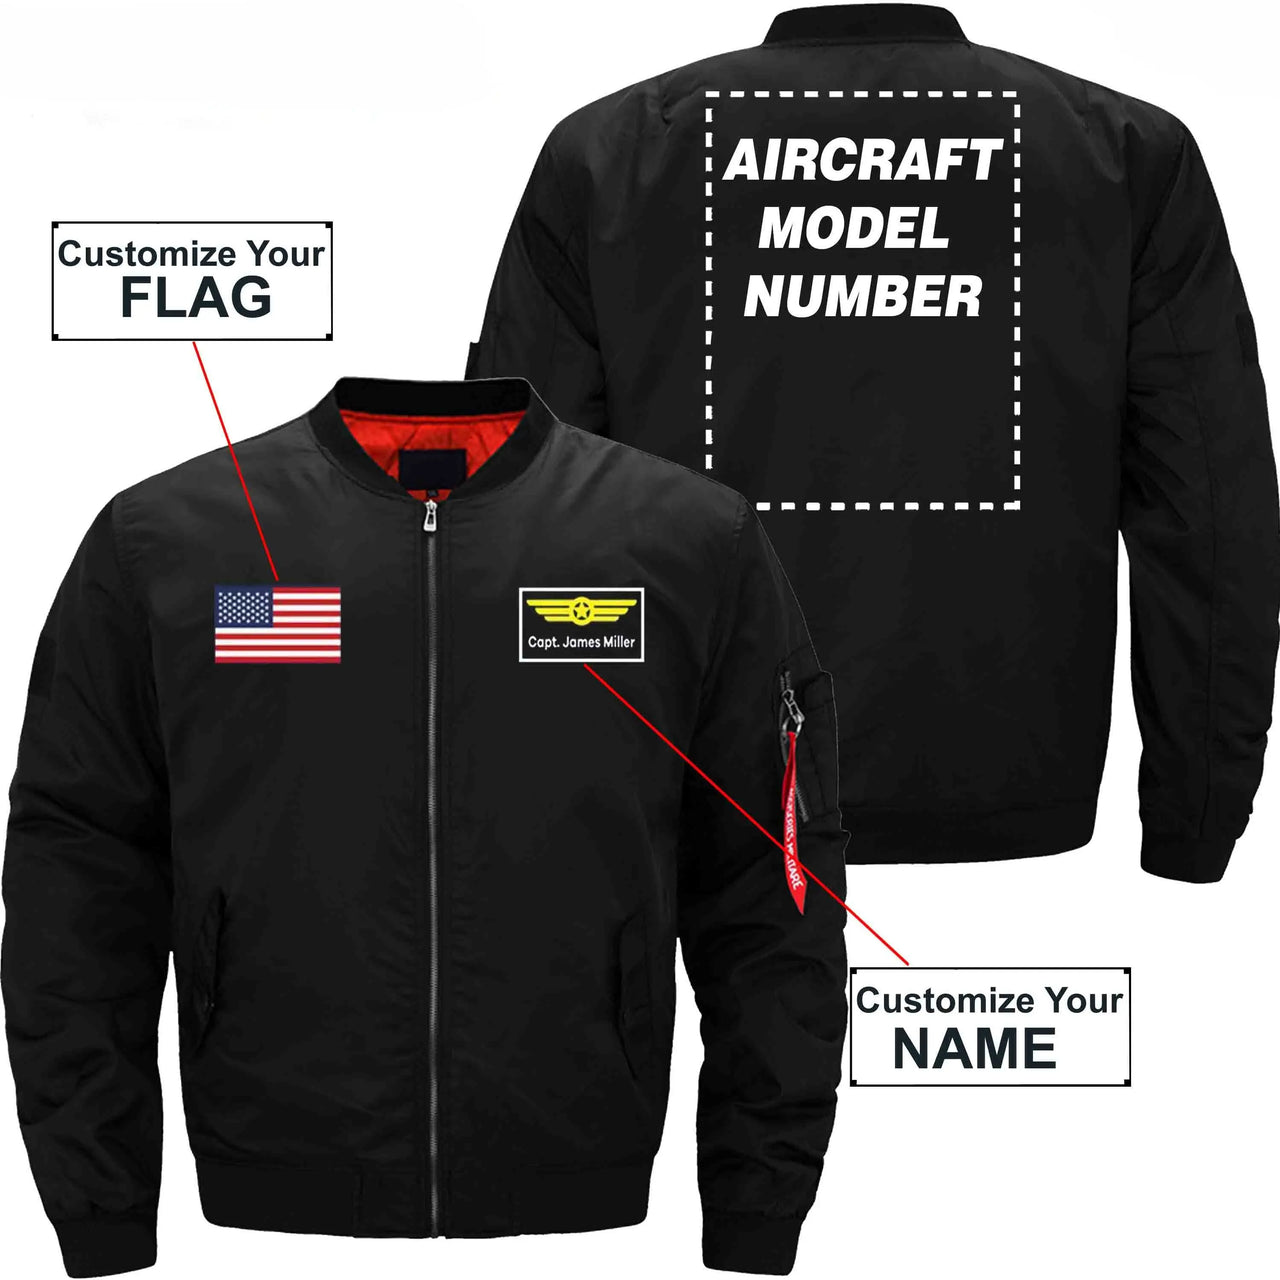 CUSTOM FLAG & NAME WITH AIRCRAFT MODEL NUMBER - JACKET THE AV8R